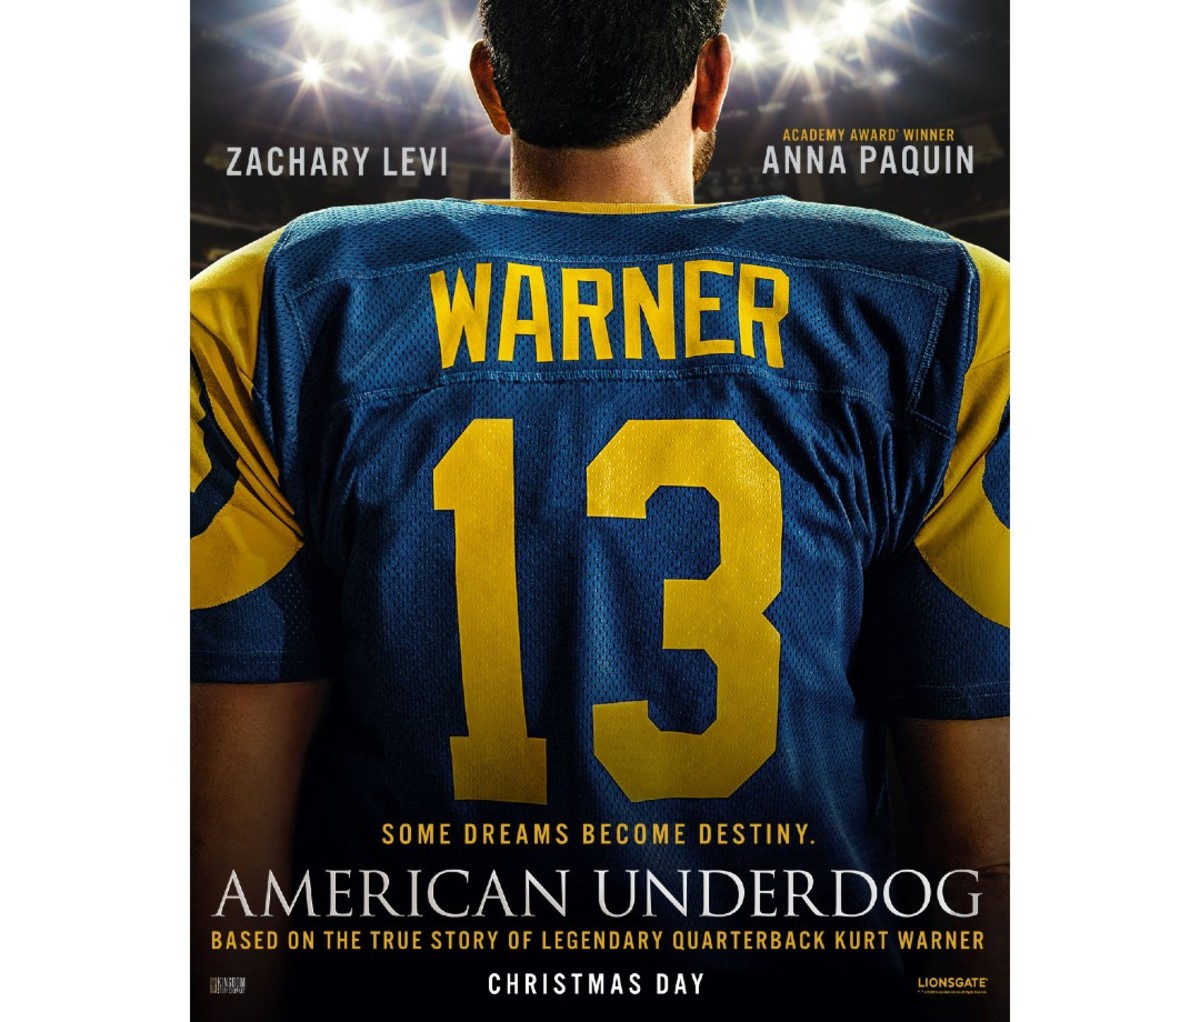 Kurt Warner Praises Zachary Levi For 'American Underdog' Portrayal